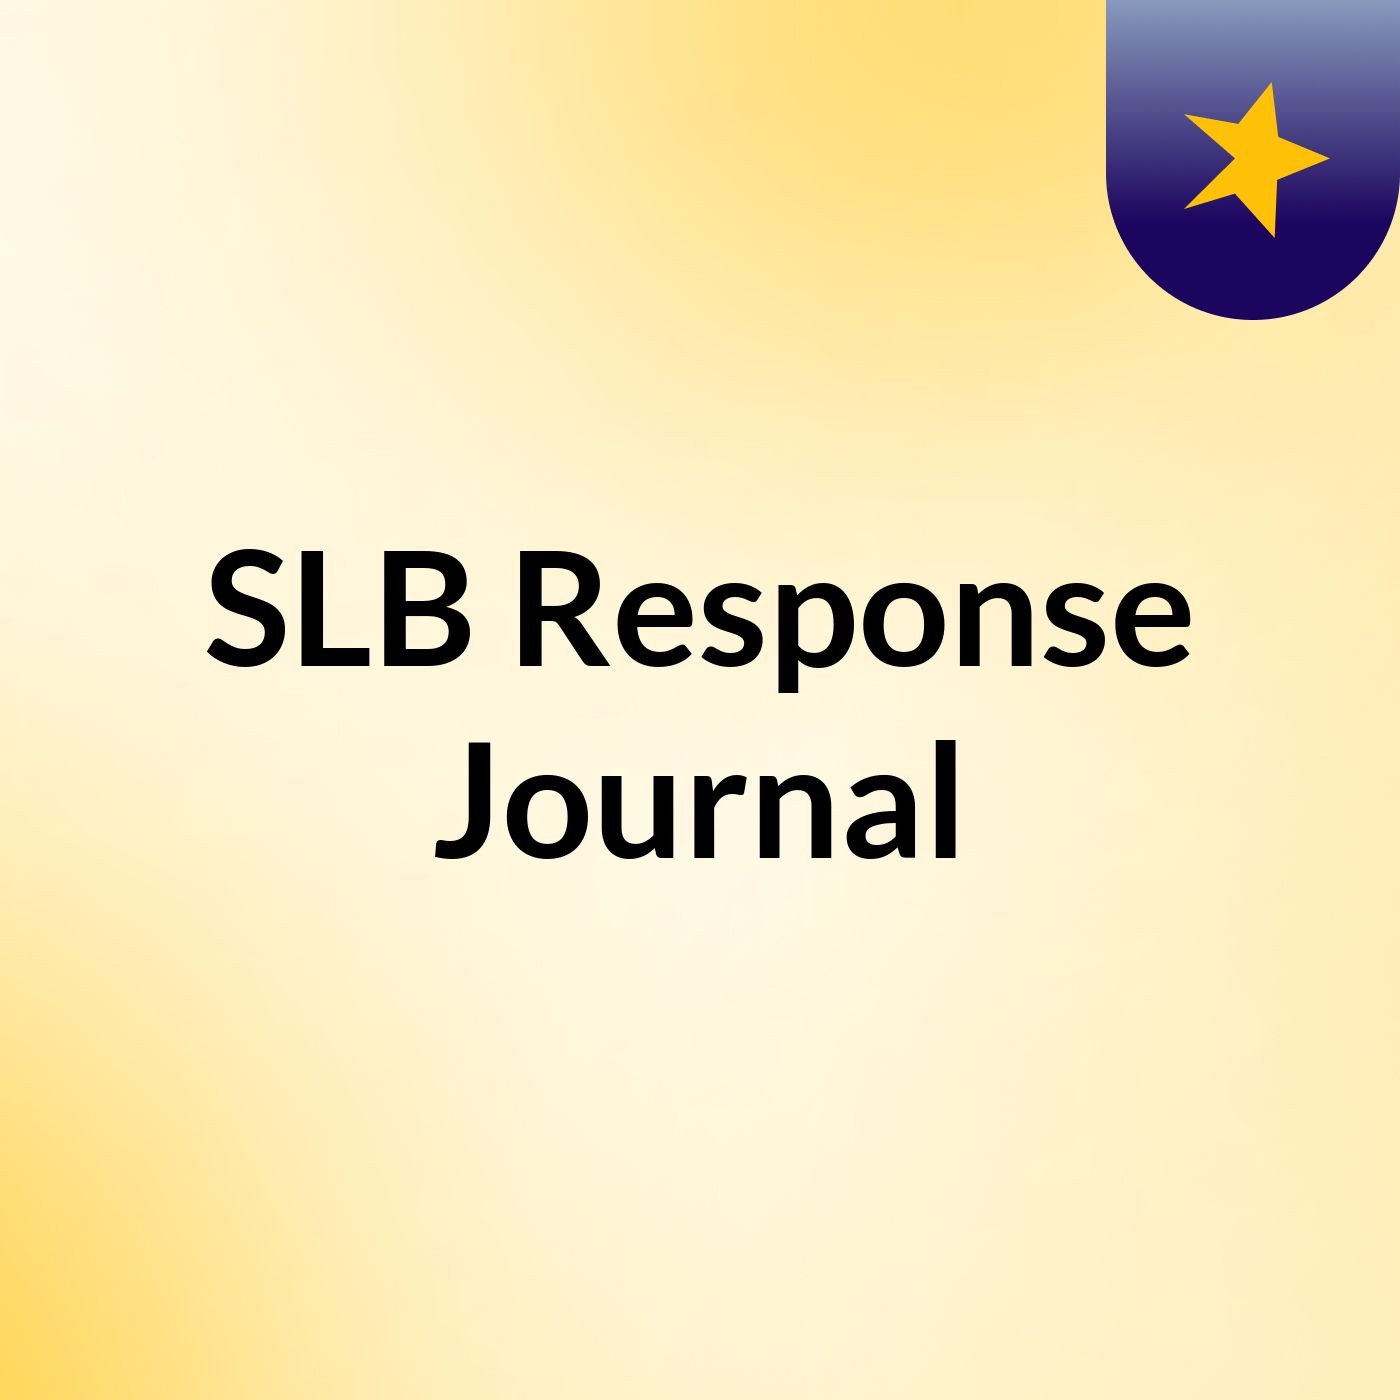 SLB Response Journal